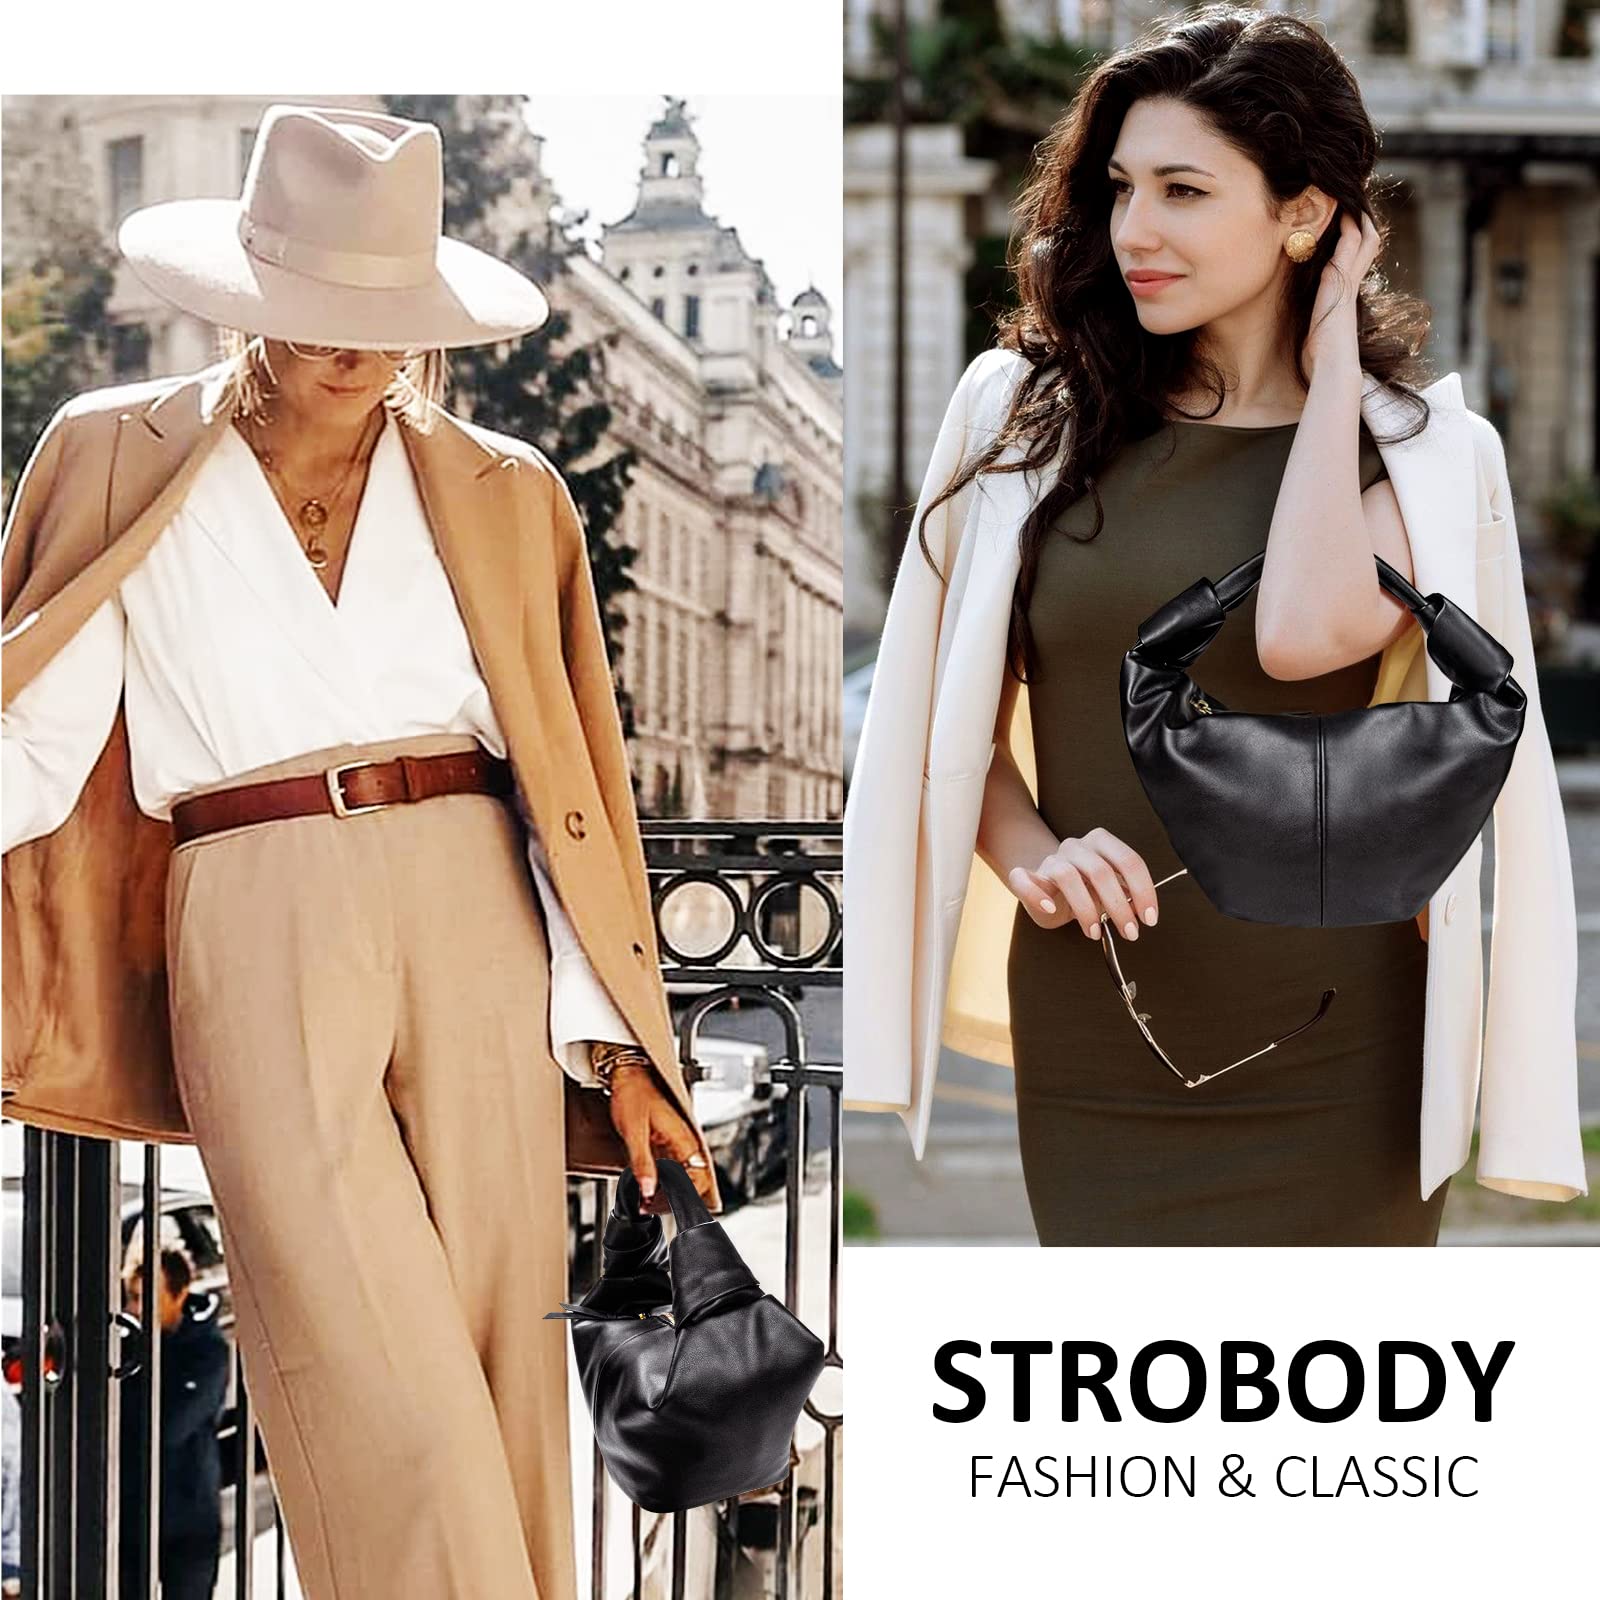 Strobody Women's Hobo Handbag and Purse, Soft Leather Shoulder Bag Satchel Clutch with Zipper Closure, Fashion Retro Designer Top Handle Bag for Work,Travel,Shopping